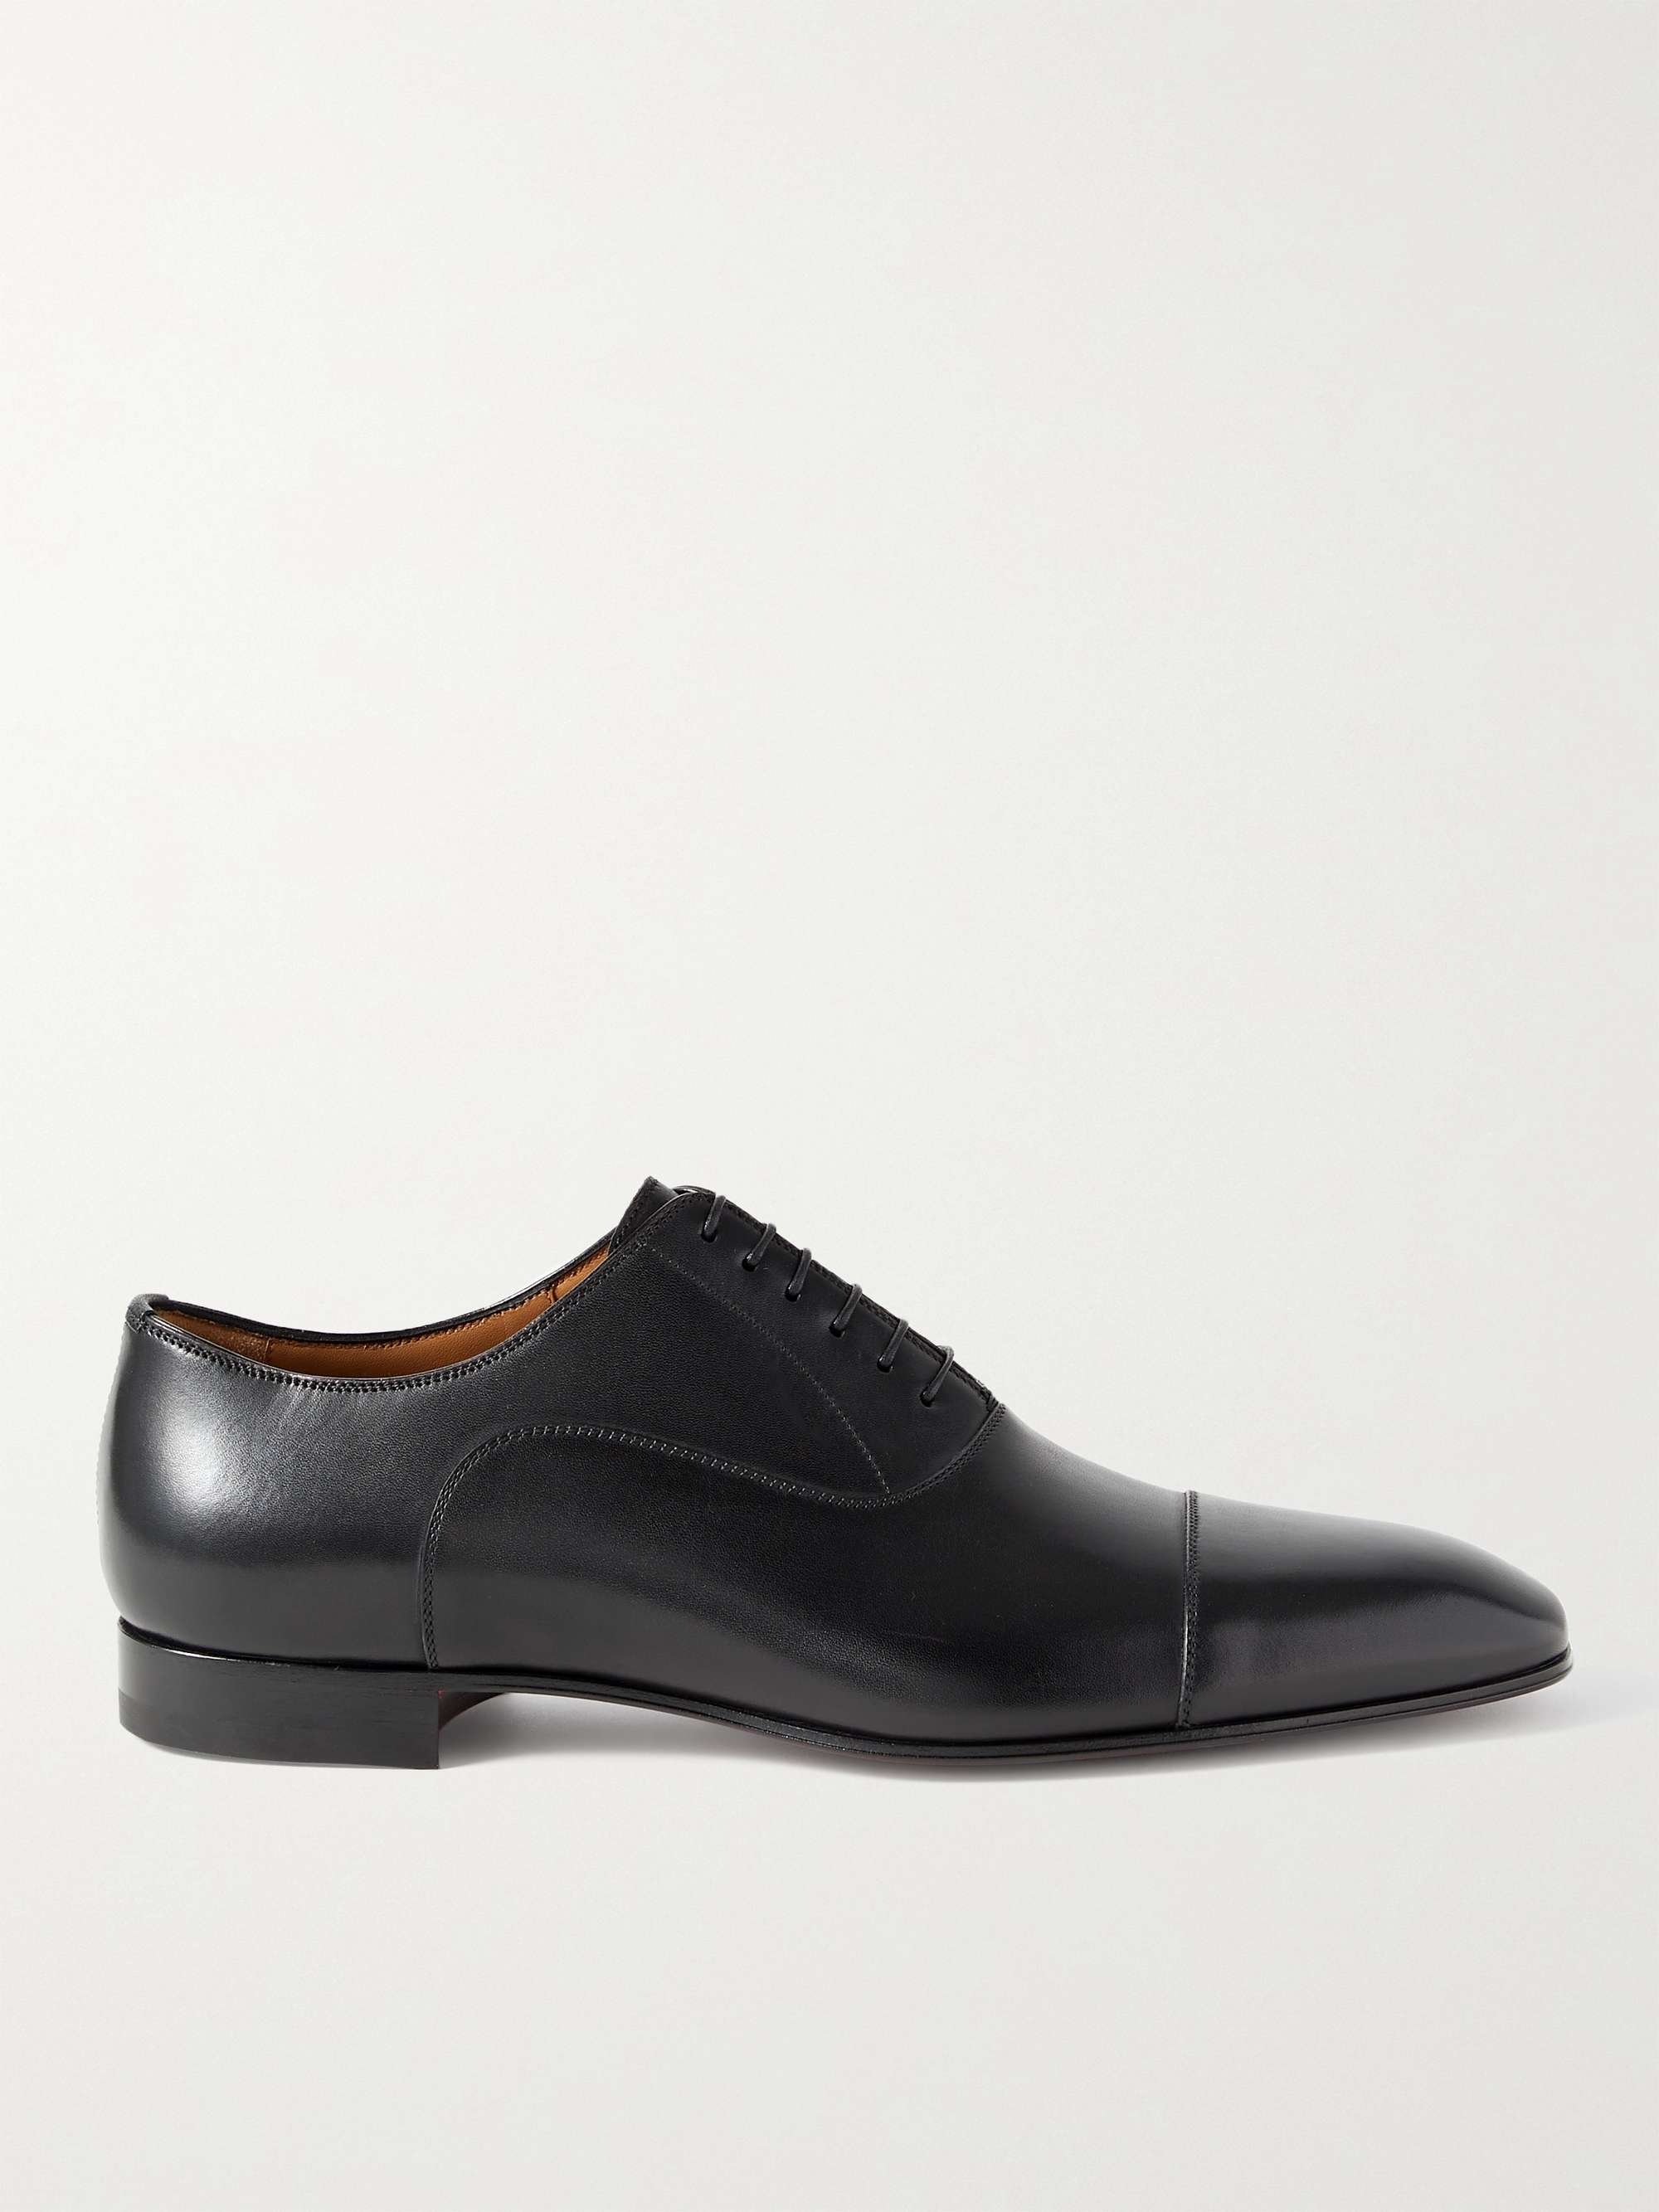 CHRISTIAN LOUBOUTIN Greggo Leather Oxford Shoes